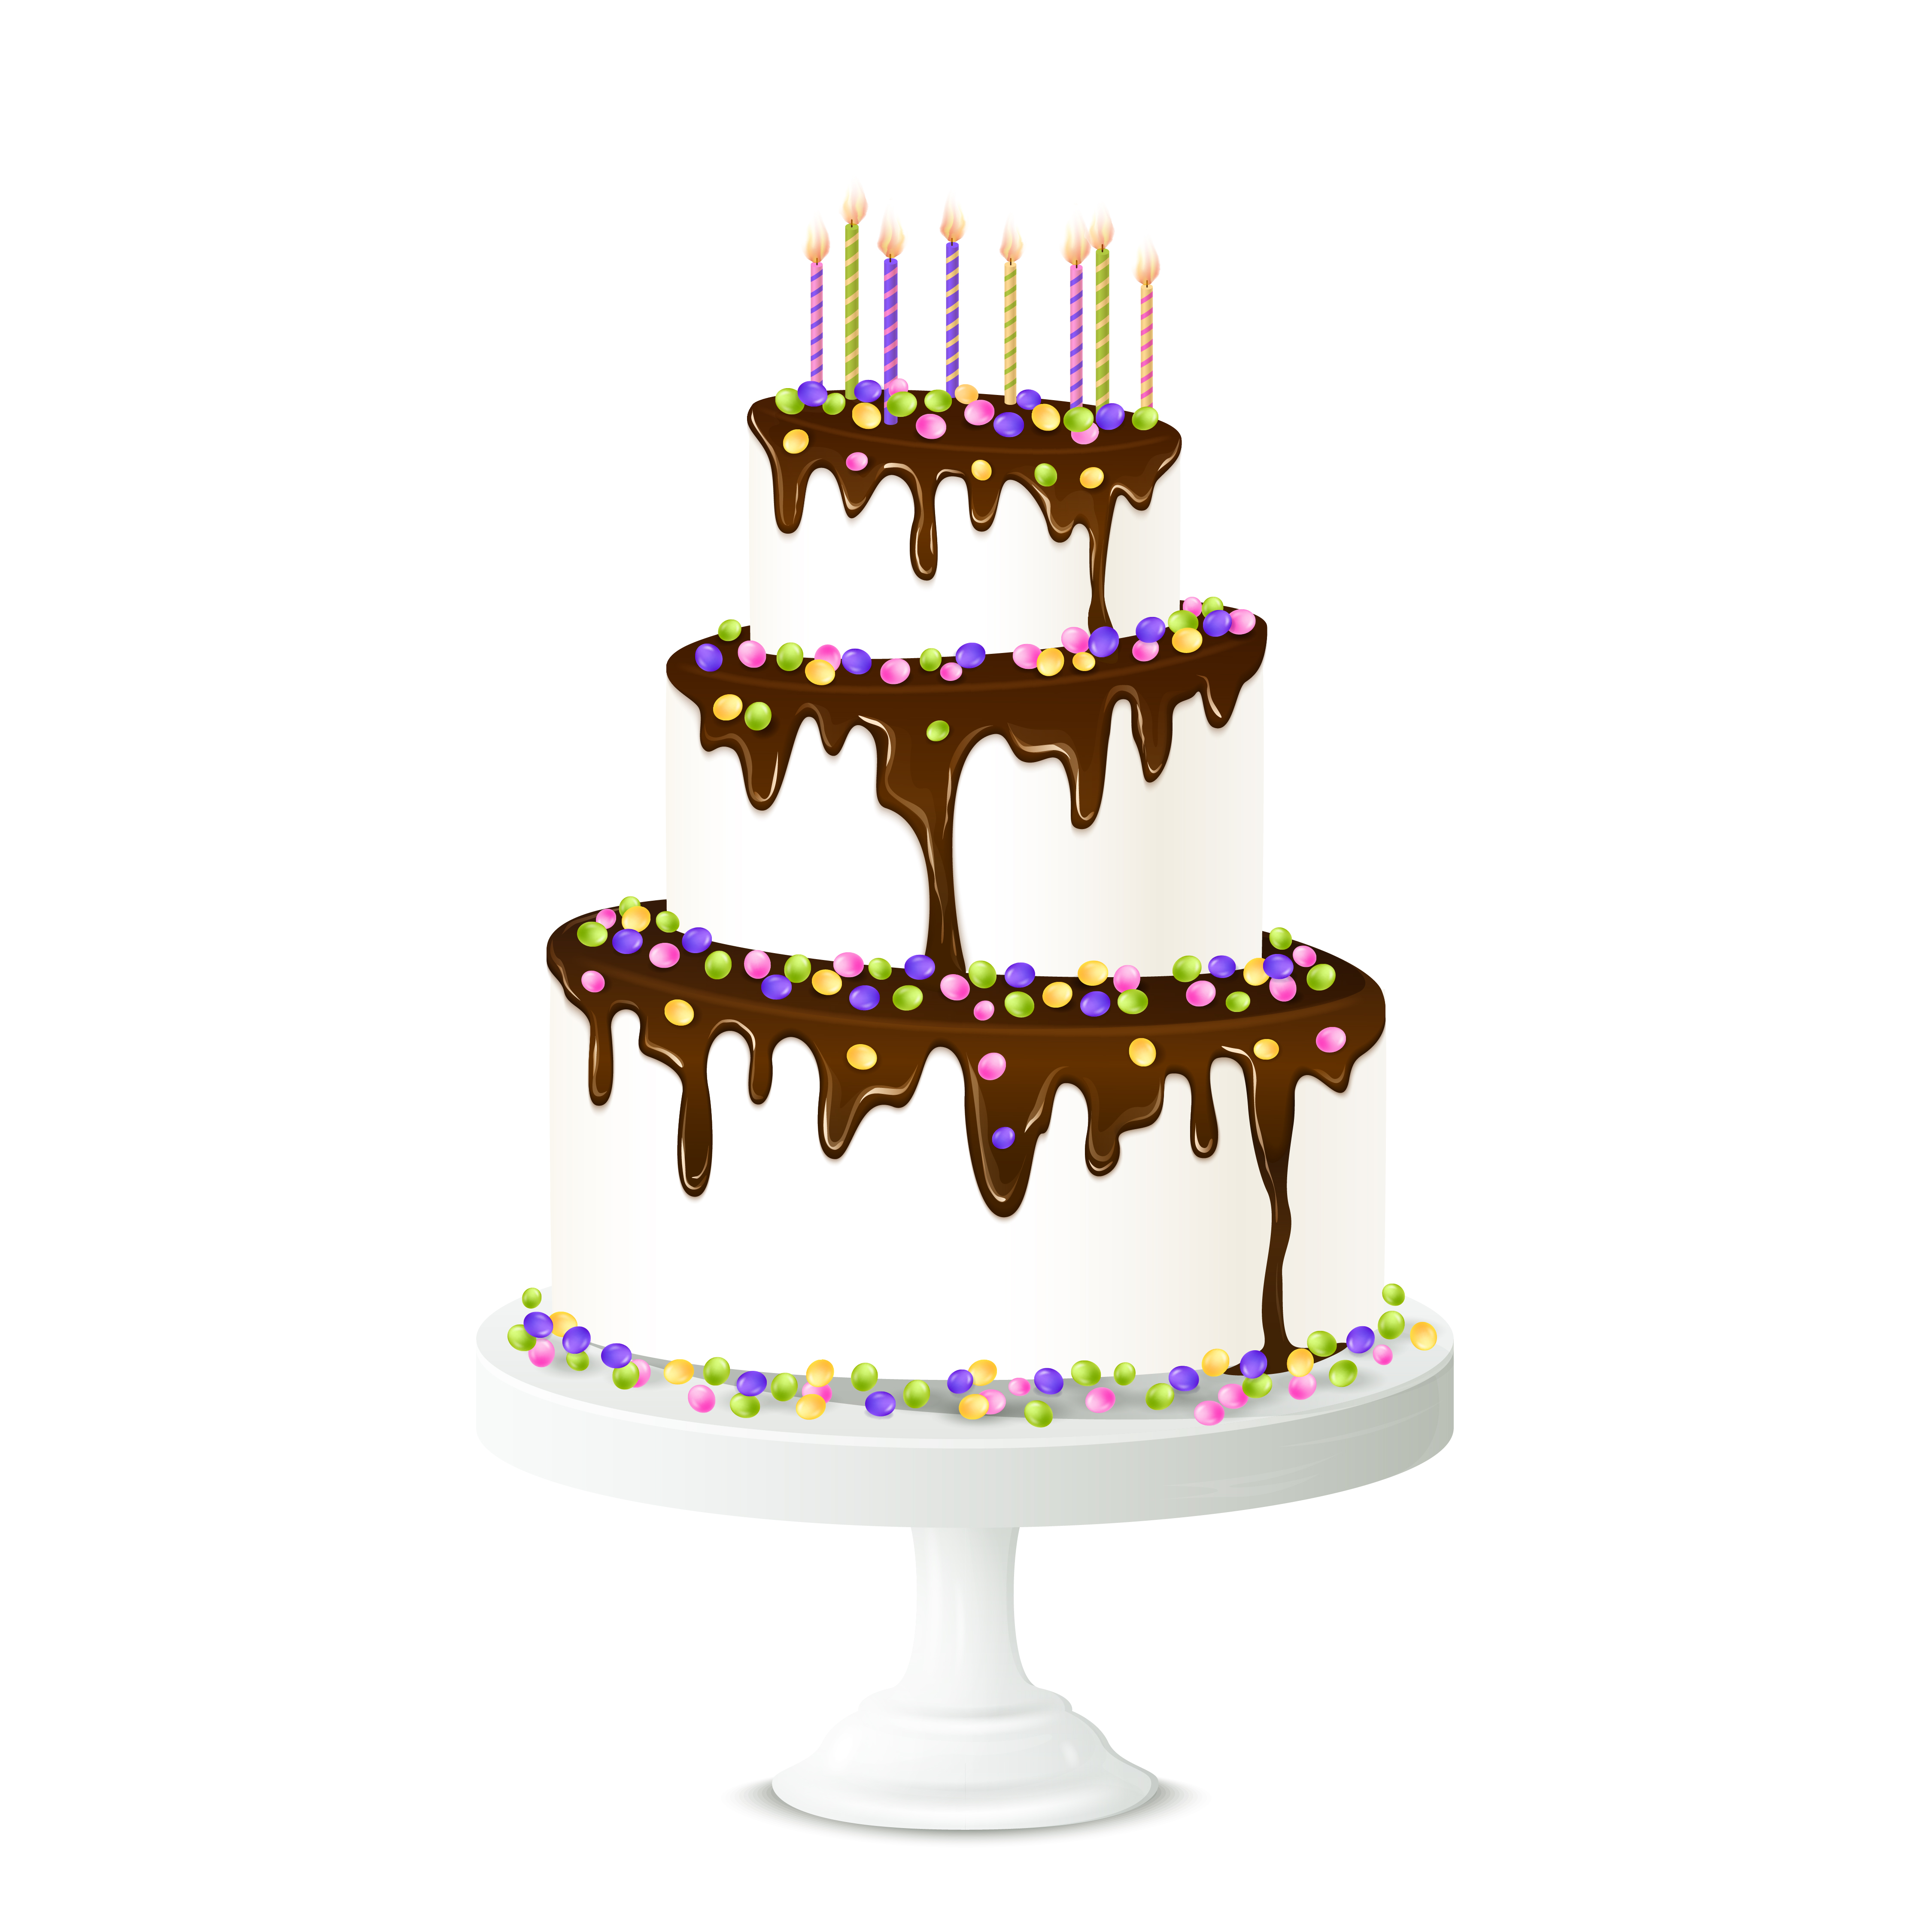 Download Birthday Cake Illustration - Download Free Vectors ...